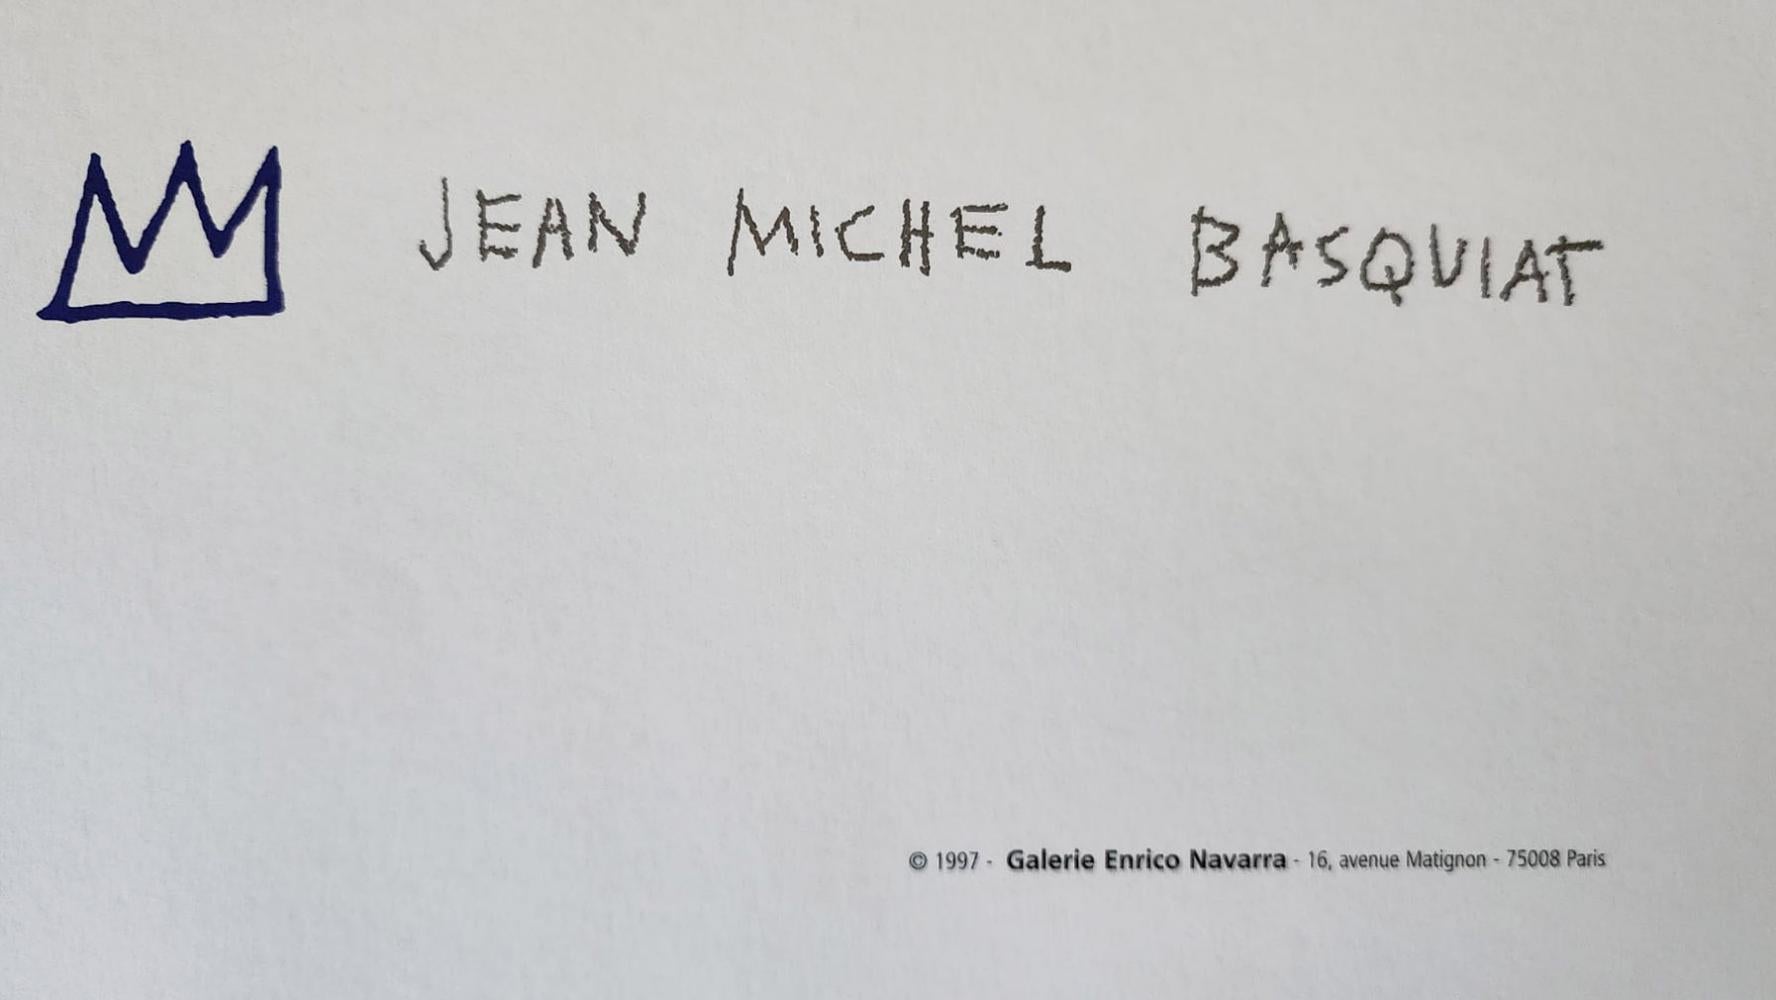 JEAN MICHEL BASQUIAT, PEZ DISPENSER 1997' VERY RARE LIMITED EDITION ESTATE LITHO - Pop Art Print by after Jean-Michel Basquiat